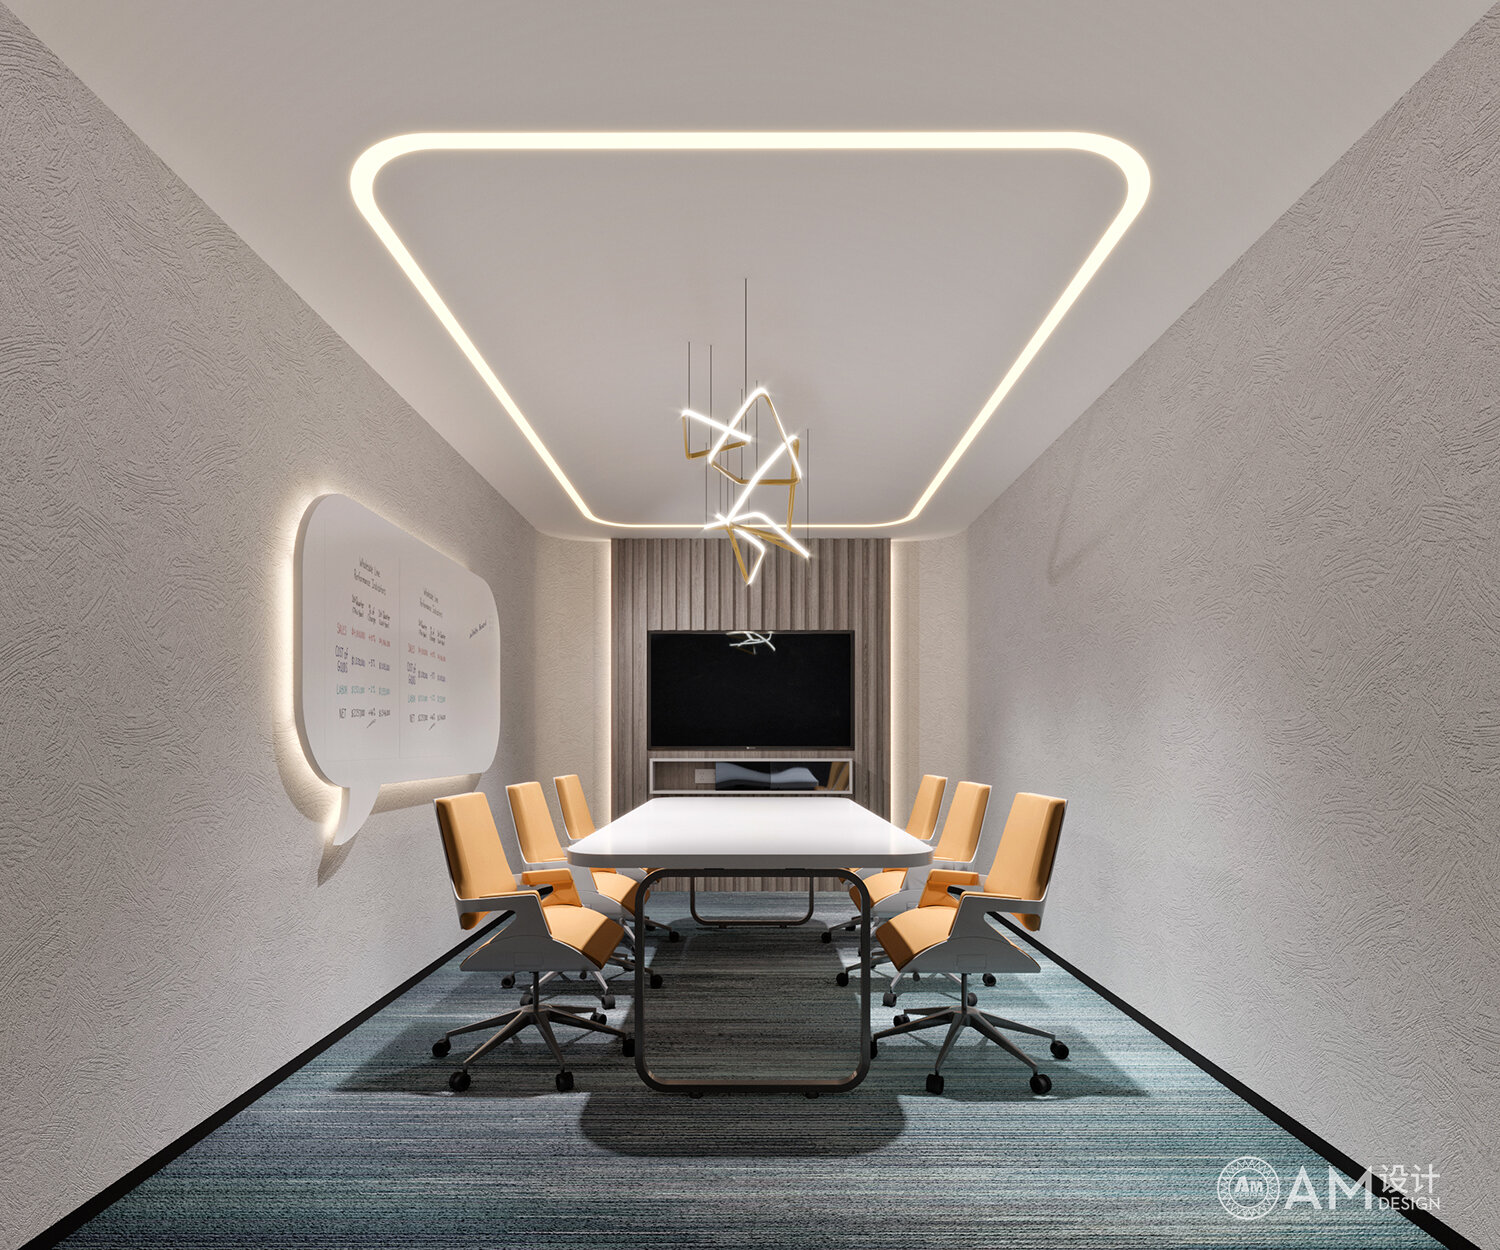 AM | Design of Beijing Jianling Siyu loft office meeting room